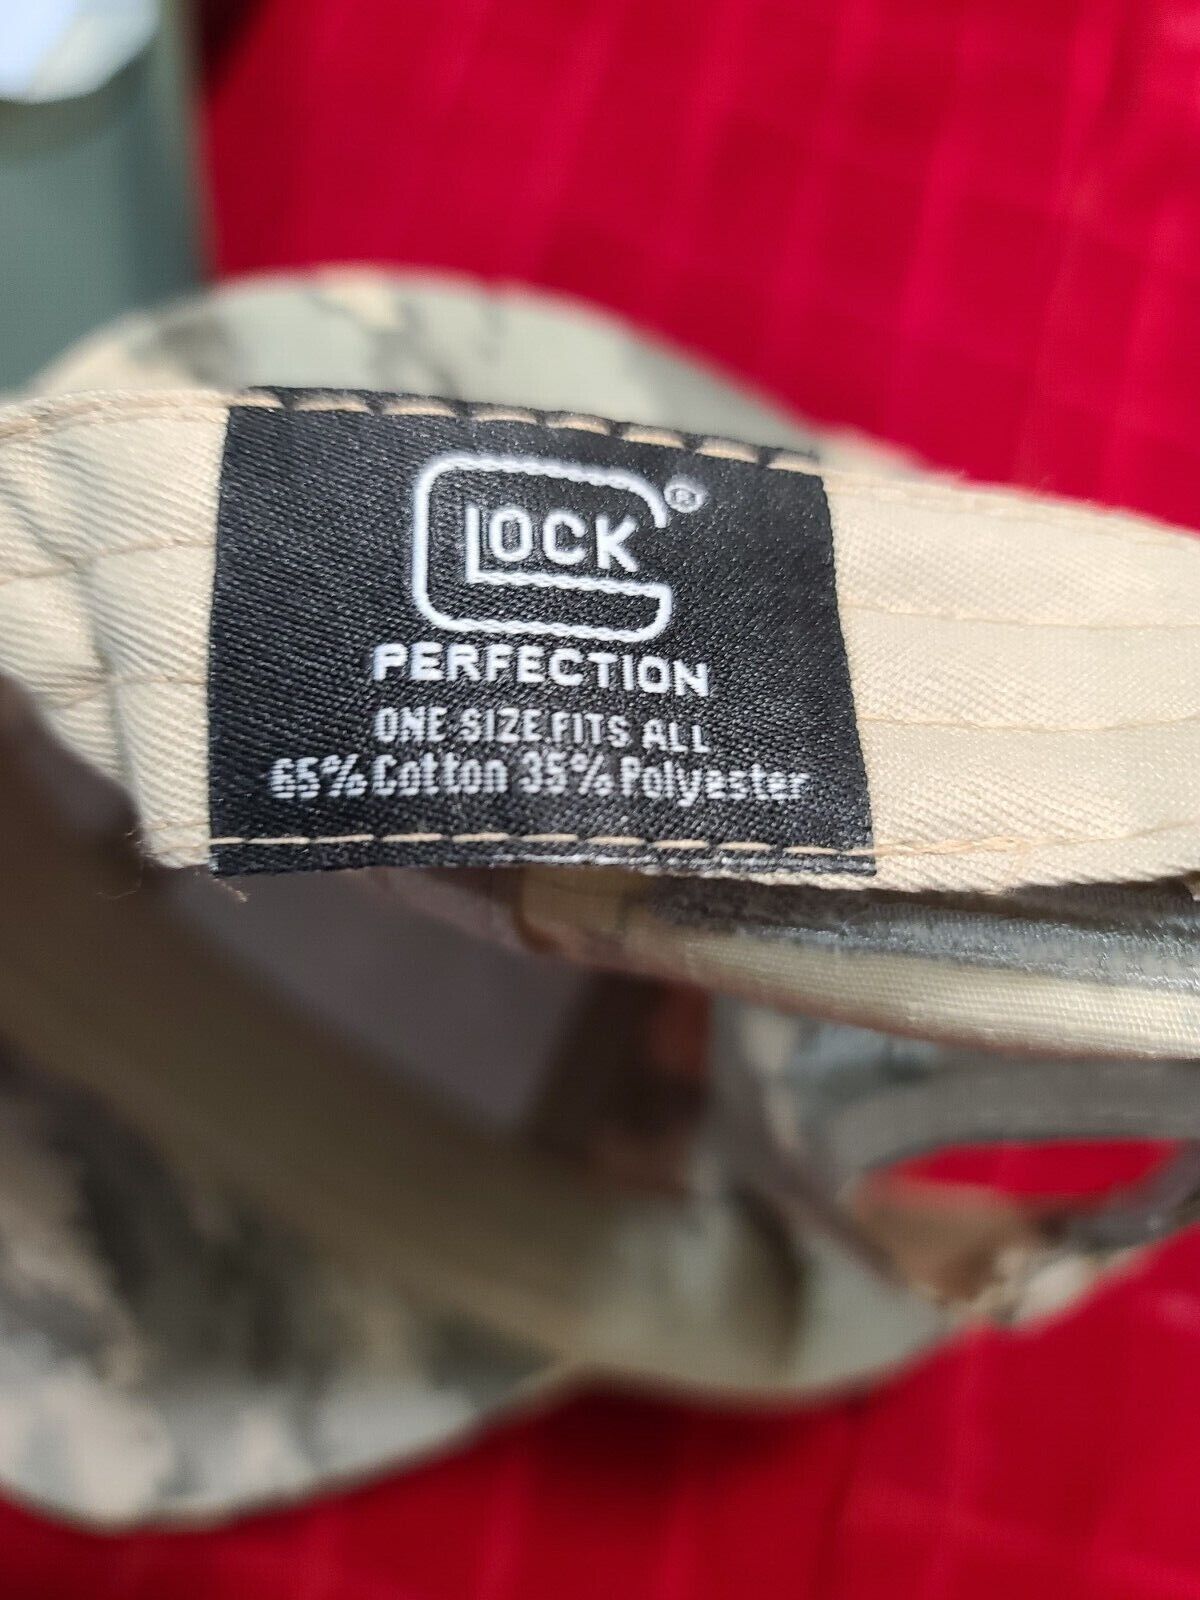 GLOCK PERFECTION BLACK STYLE CAP